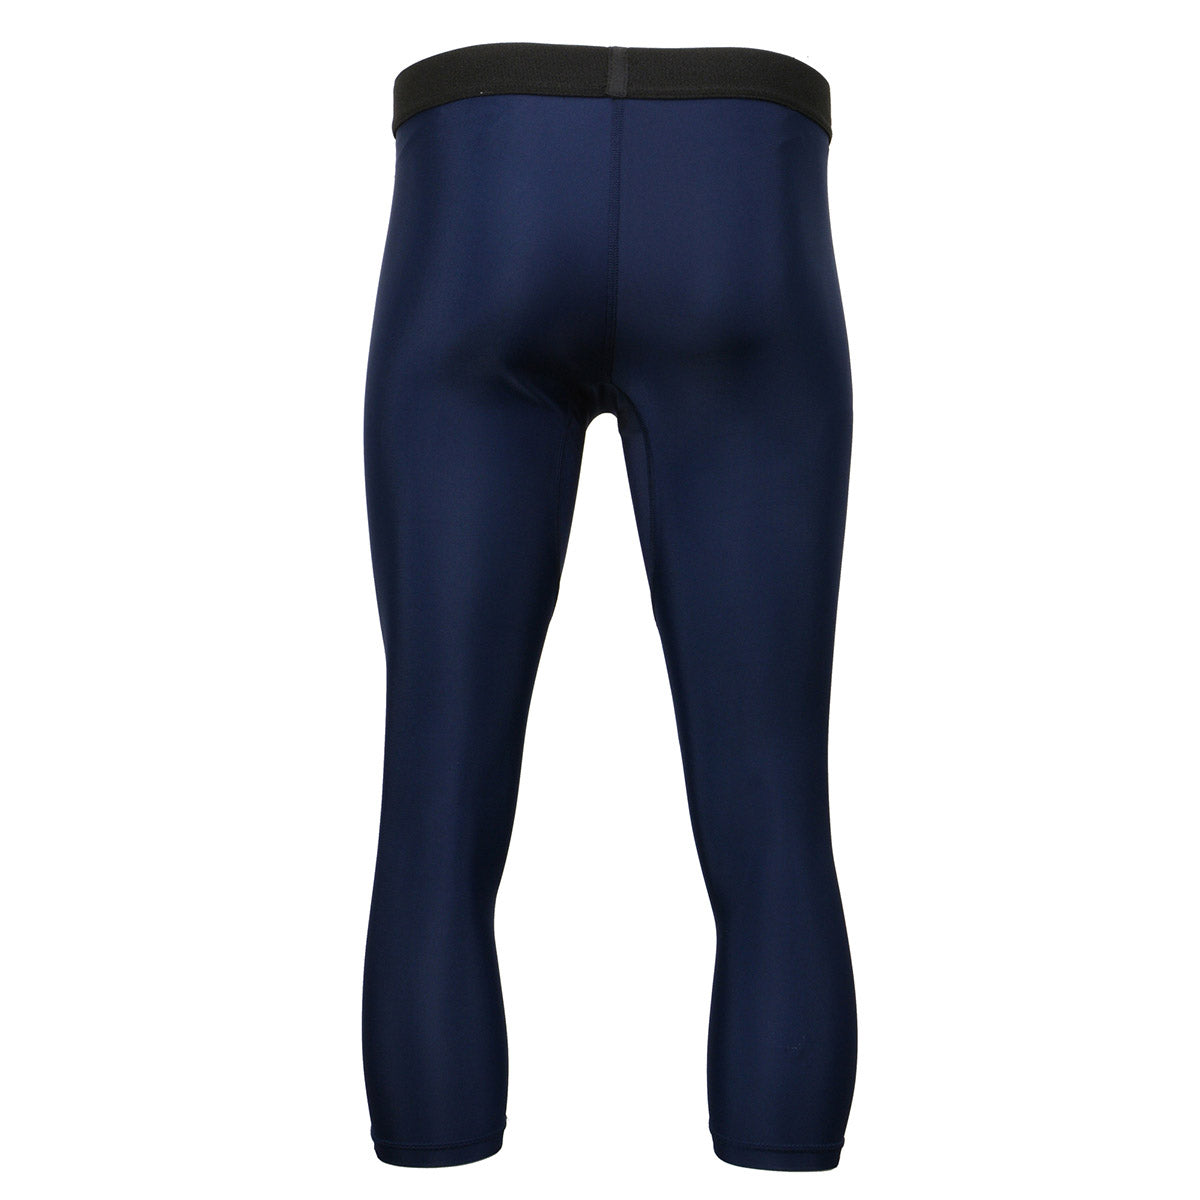 X-Fitness XFM7003 Men's Blue 3/4 Length Compression Base Layer Workout Pants Jiu Jitsu Spats Tights